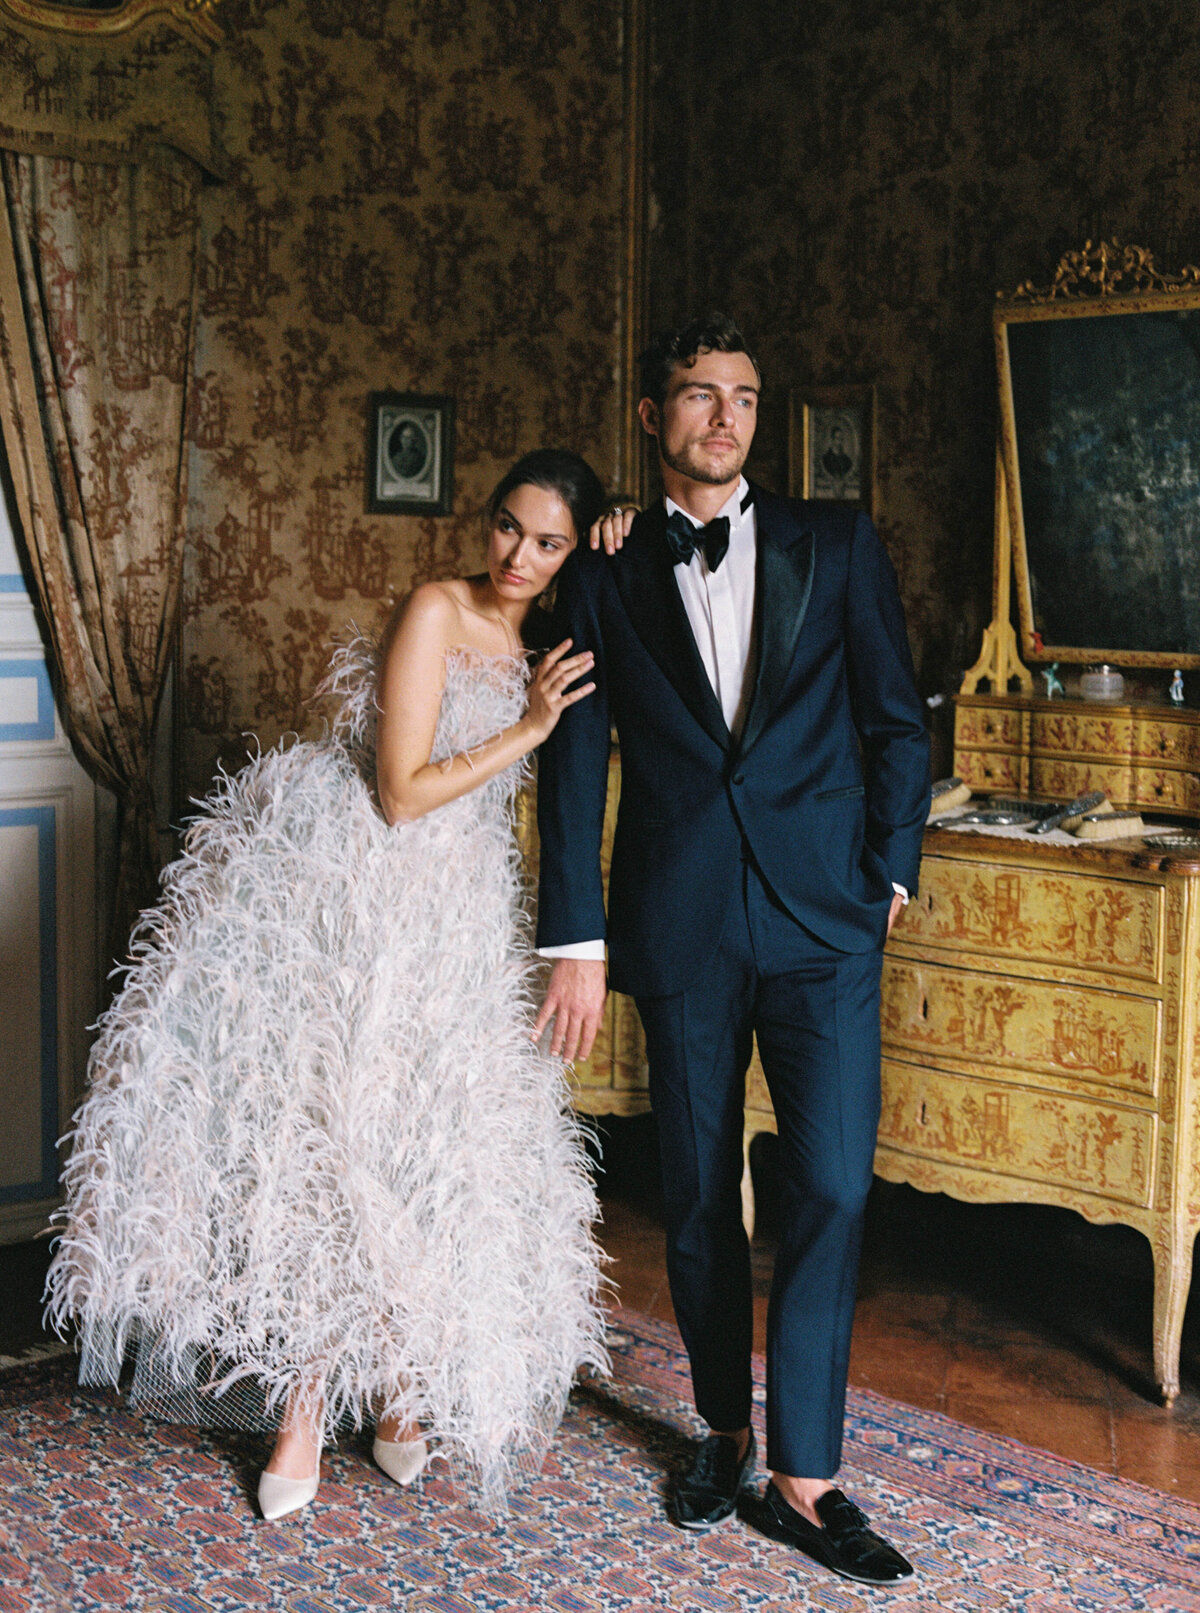 Wedding in Tuscany Italy - Janna Brown - Wedding Photographer Tuscany